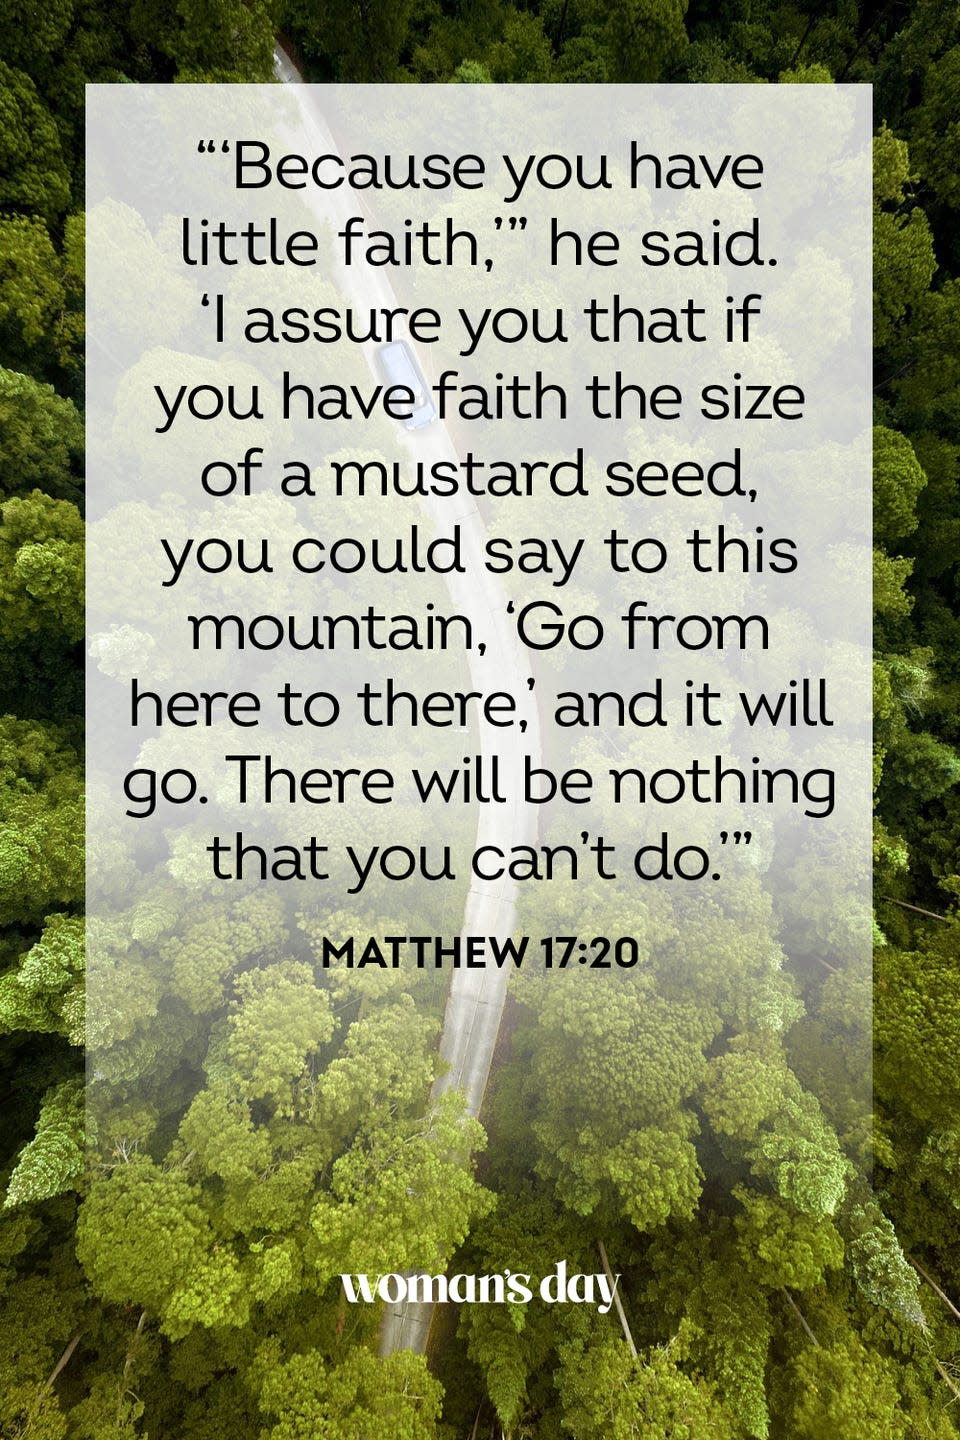 11) Matthew 17:20